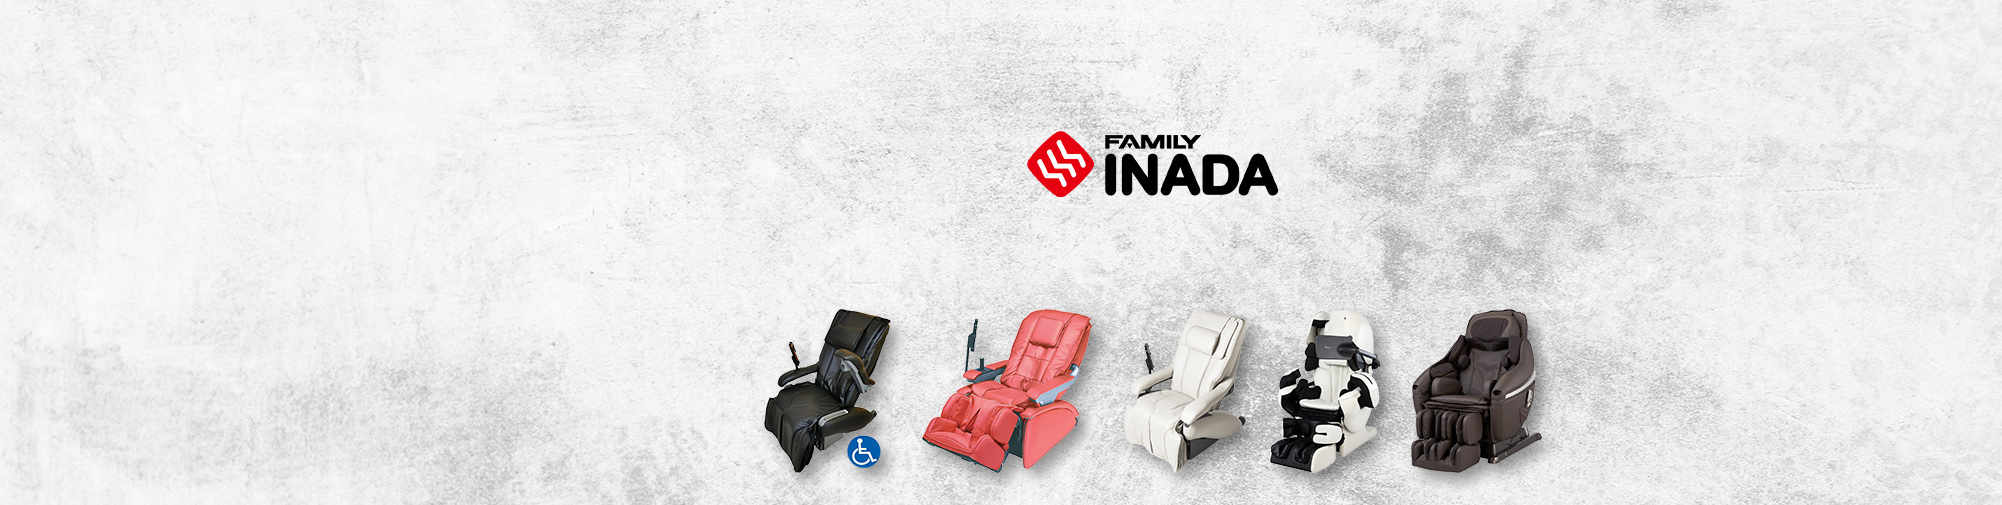 Famill Inada - traditionell japanesch Firma | Massage Stull Welt